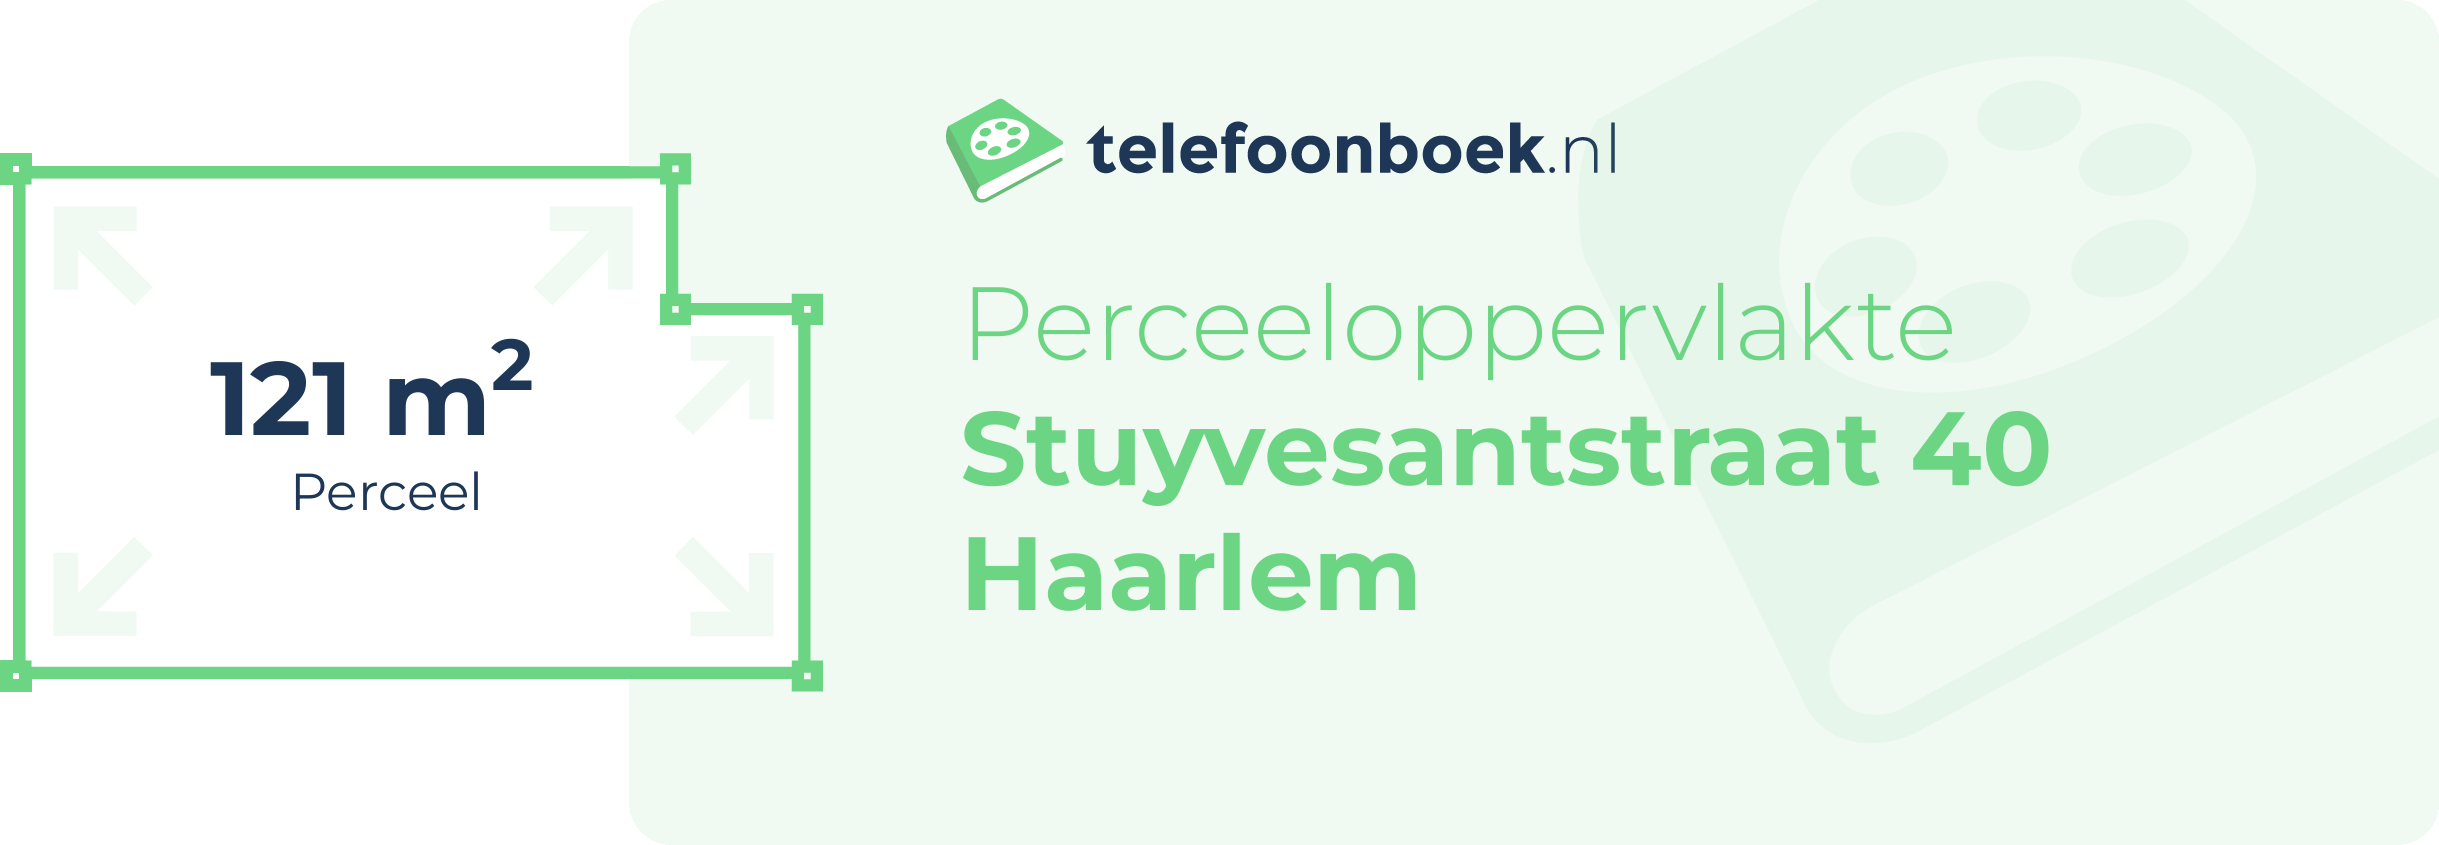 Perceeloppervlakte Stuyvesantstraat 40 Haarlem